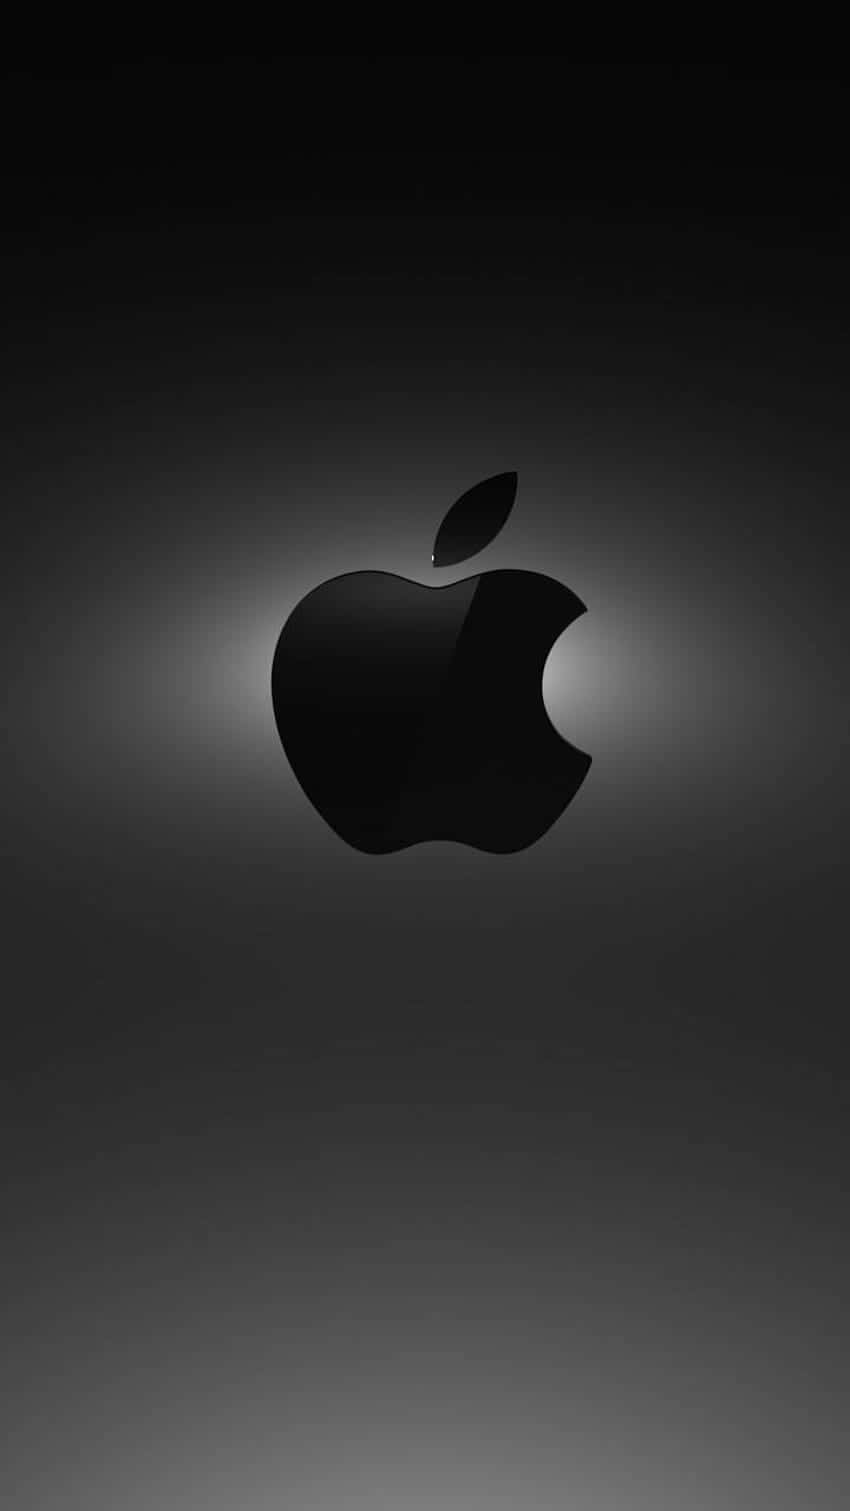 Download The iconic Apple logo in sleek black Wallpaper | Wallpapers.com